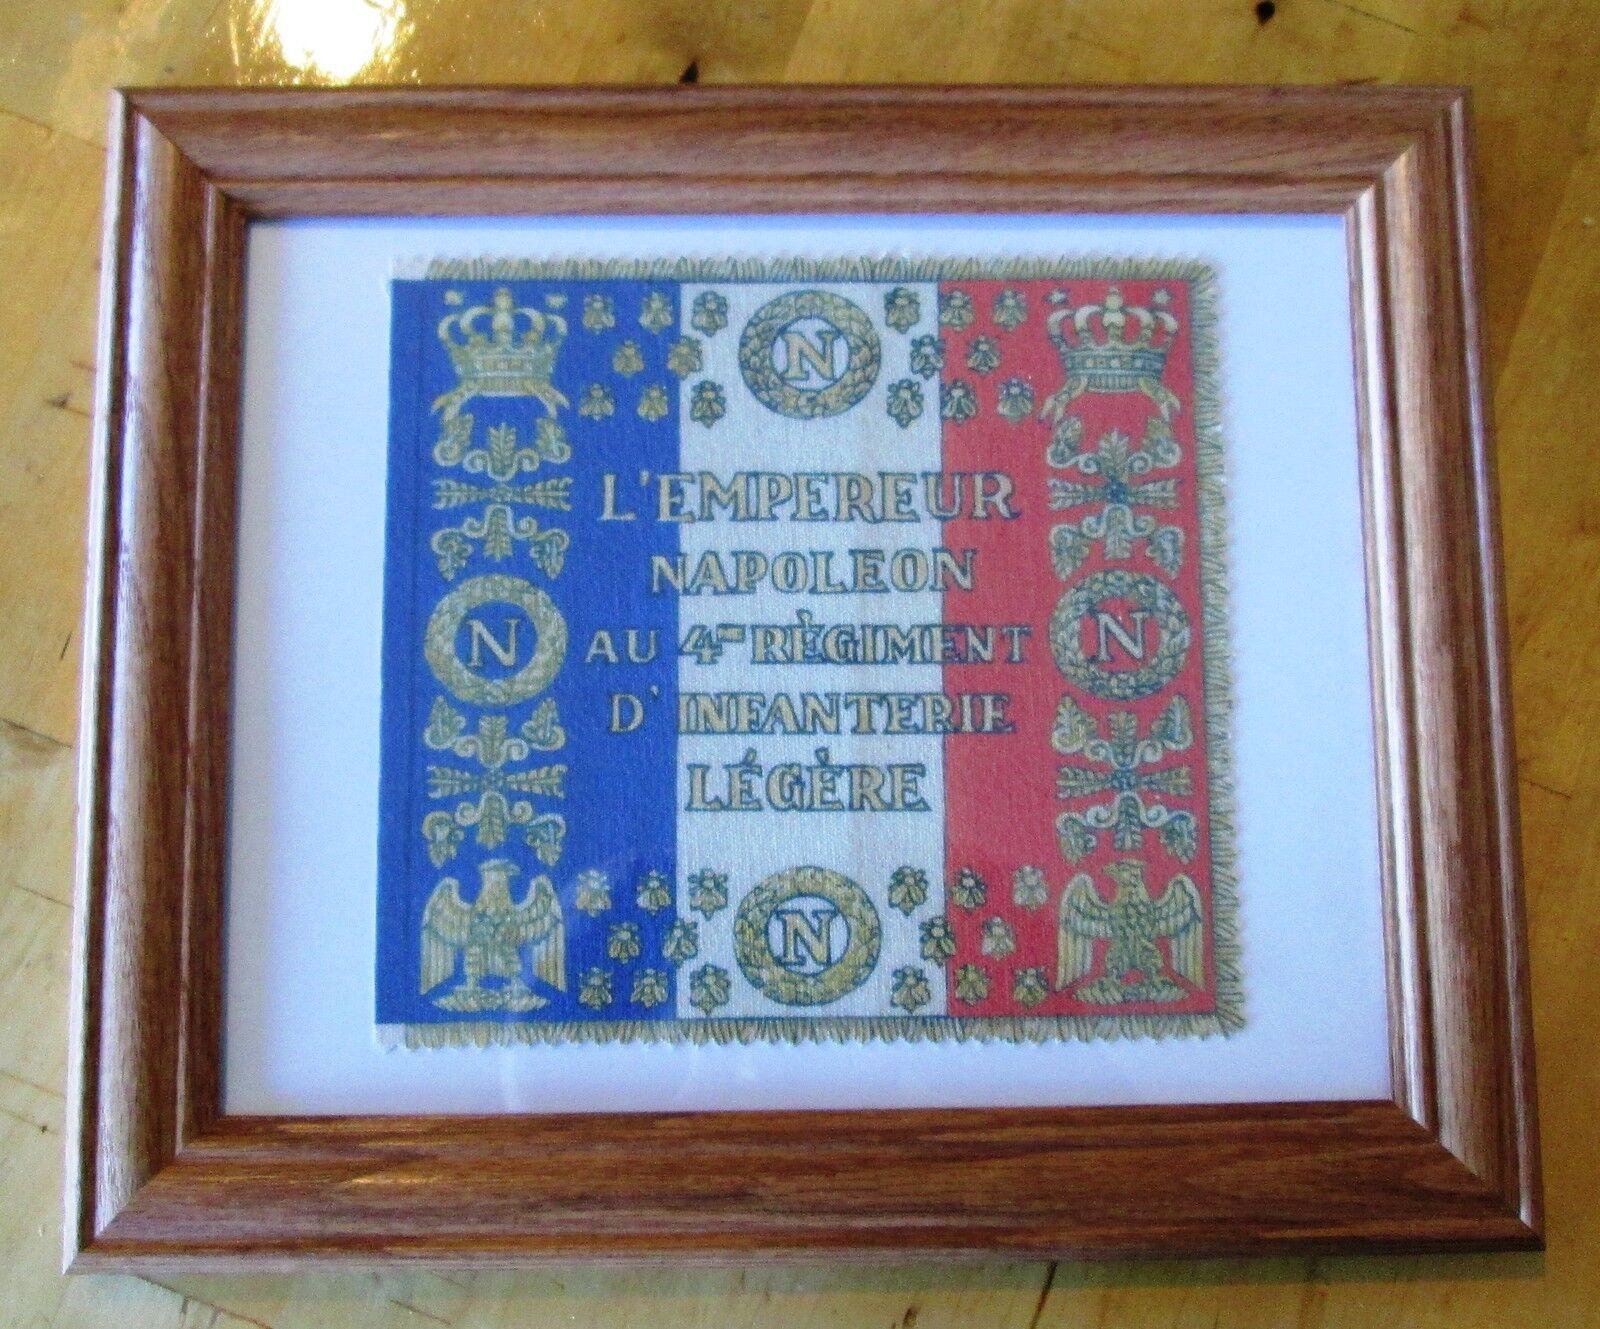 Napoleonic Wars. Napoleon Bonaparte Flag...France, French Flag, 4th Regiment